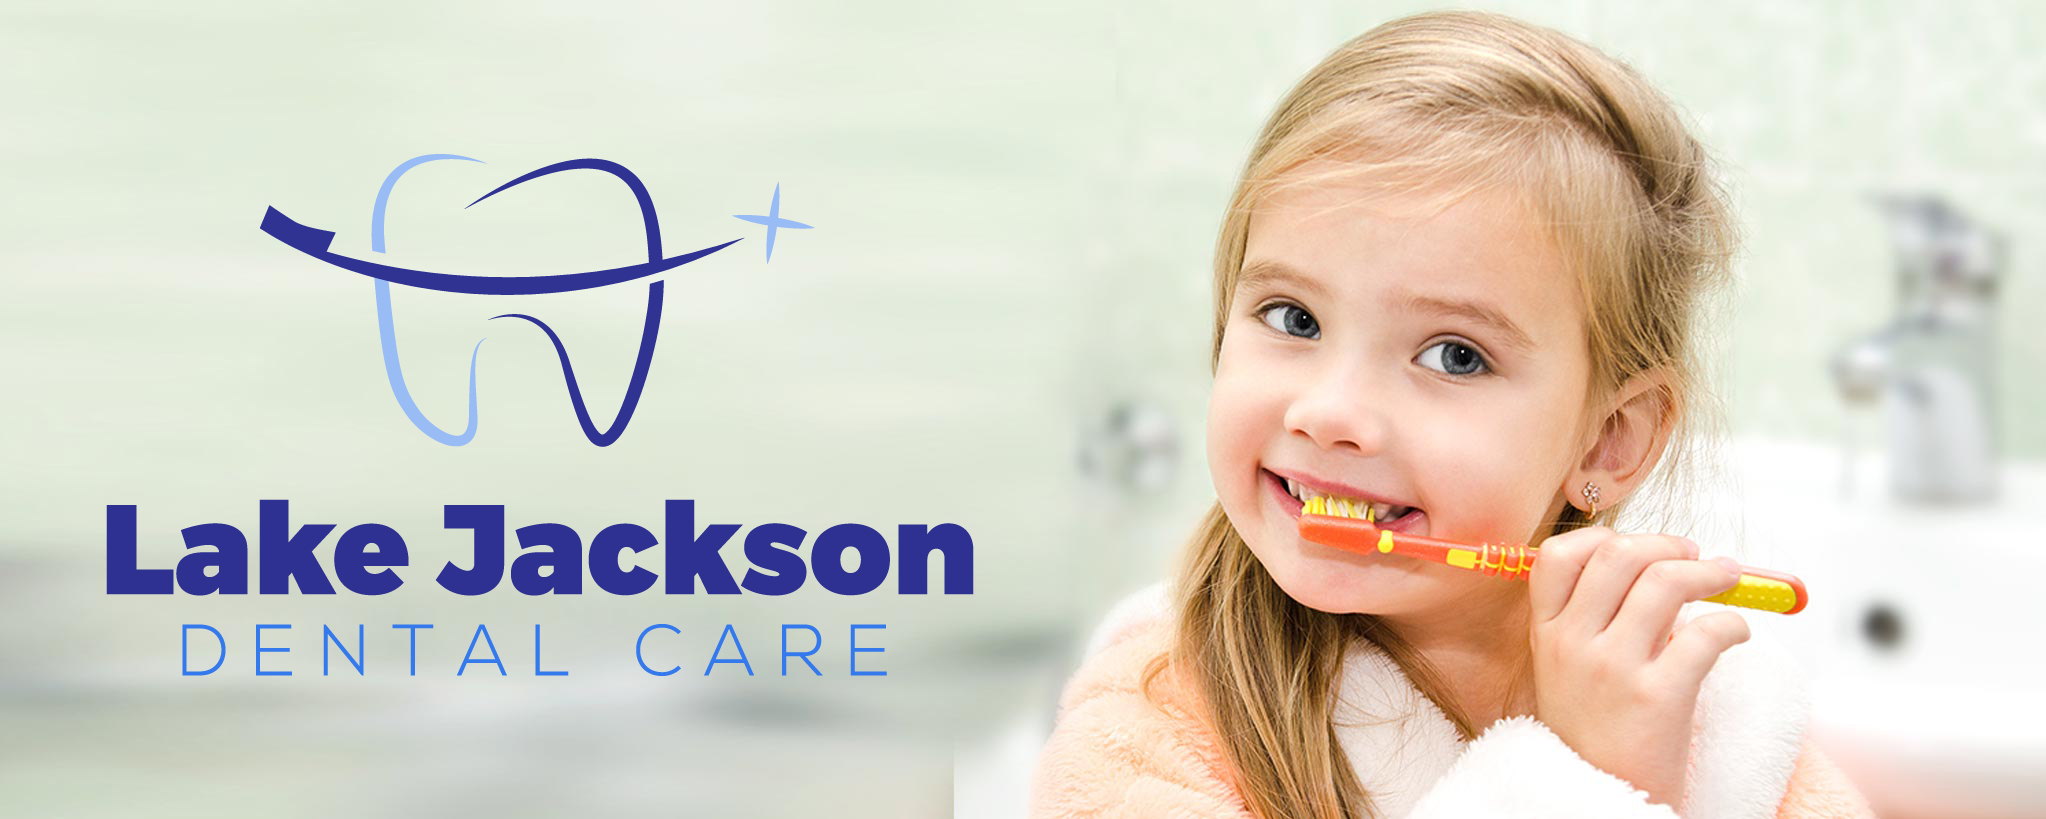 Lake Jackson Dental Care Pediatric Dentist Says Early